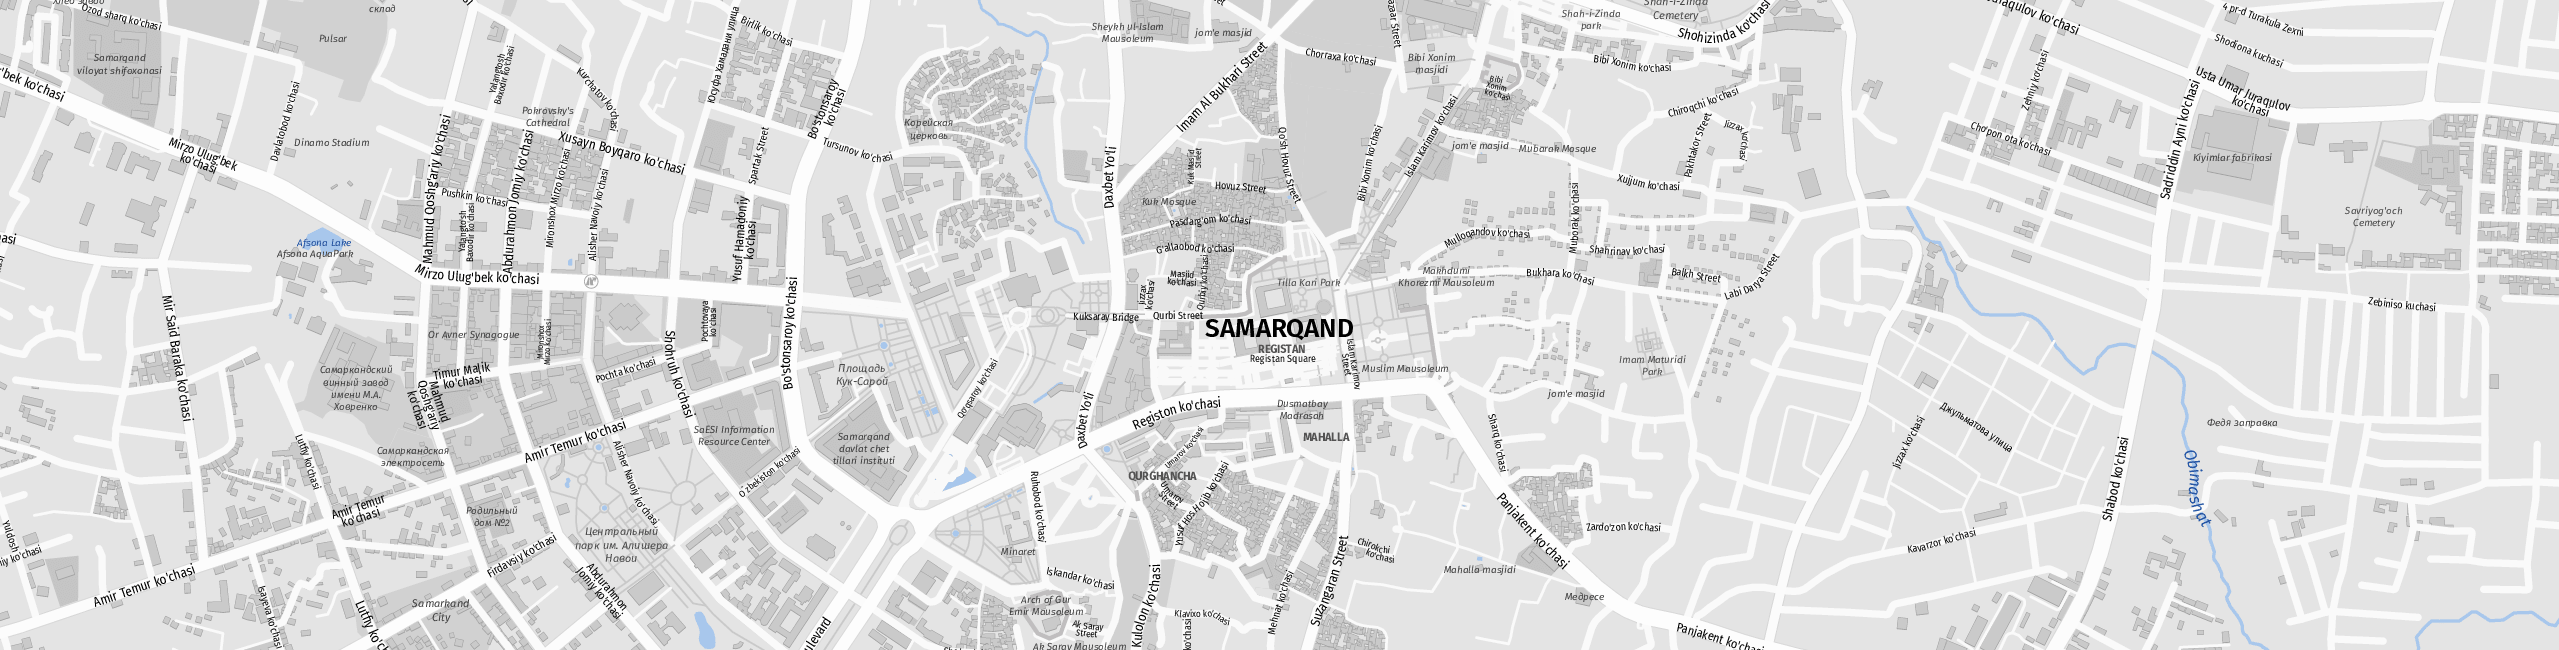 Stadtplan Samarqand zum Downloaden.